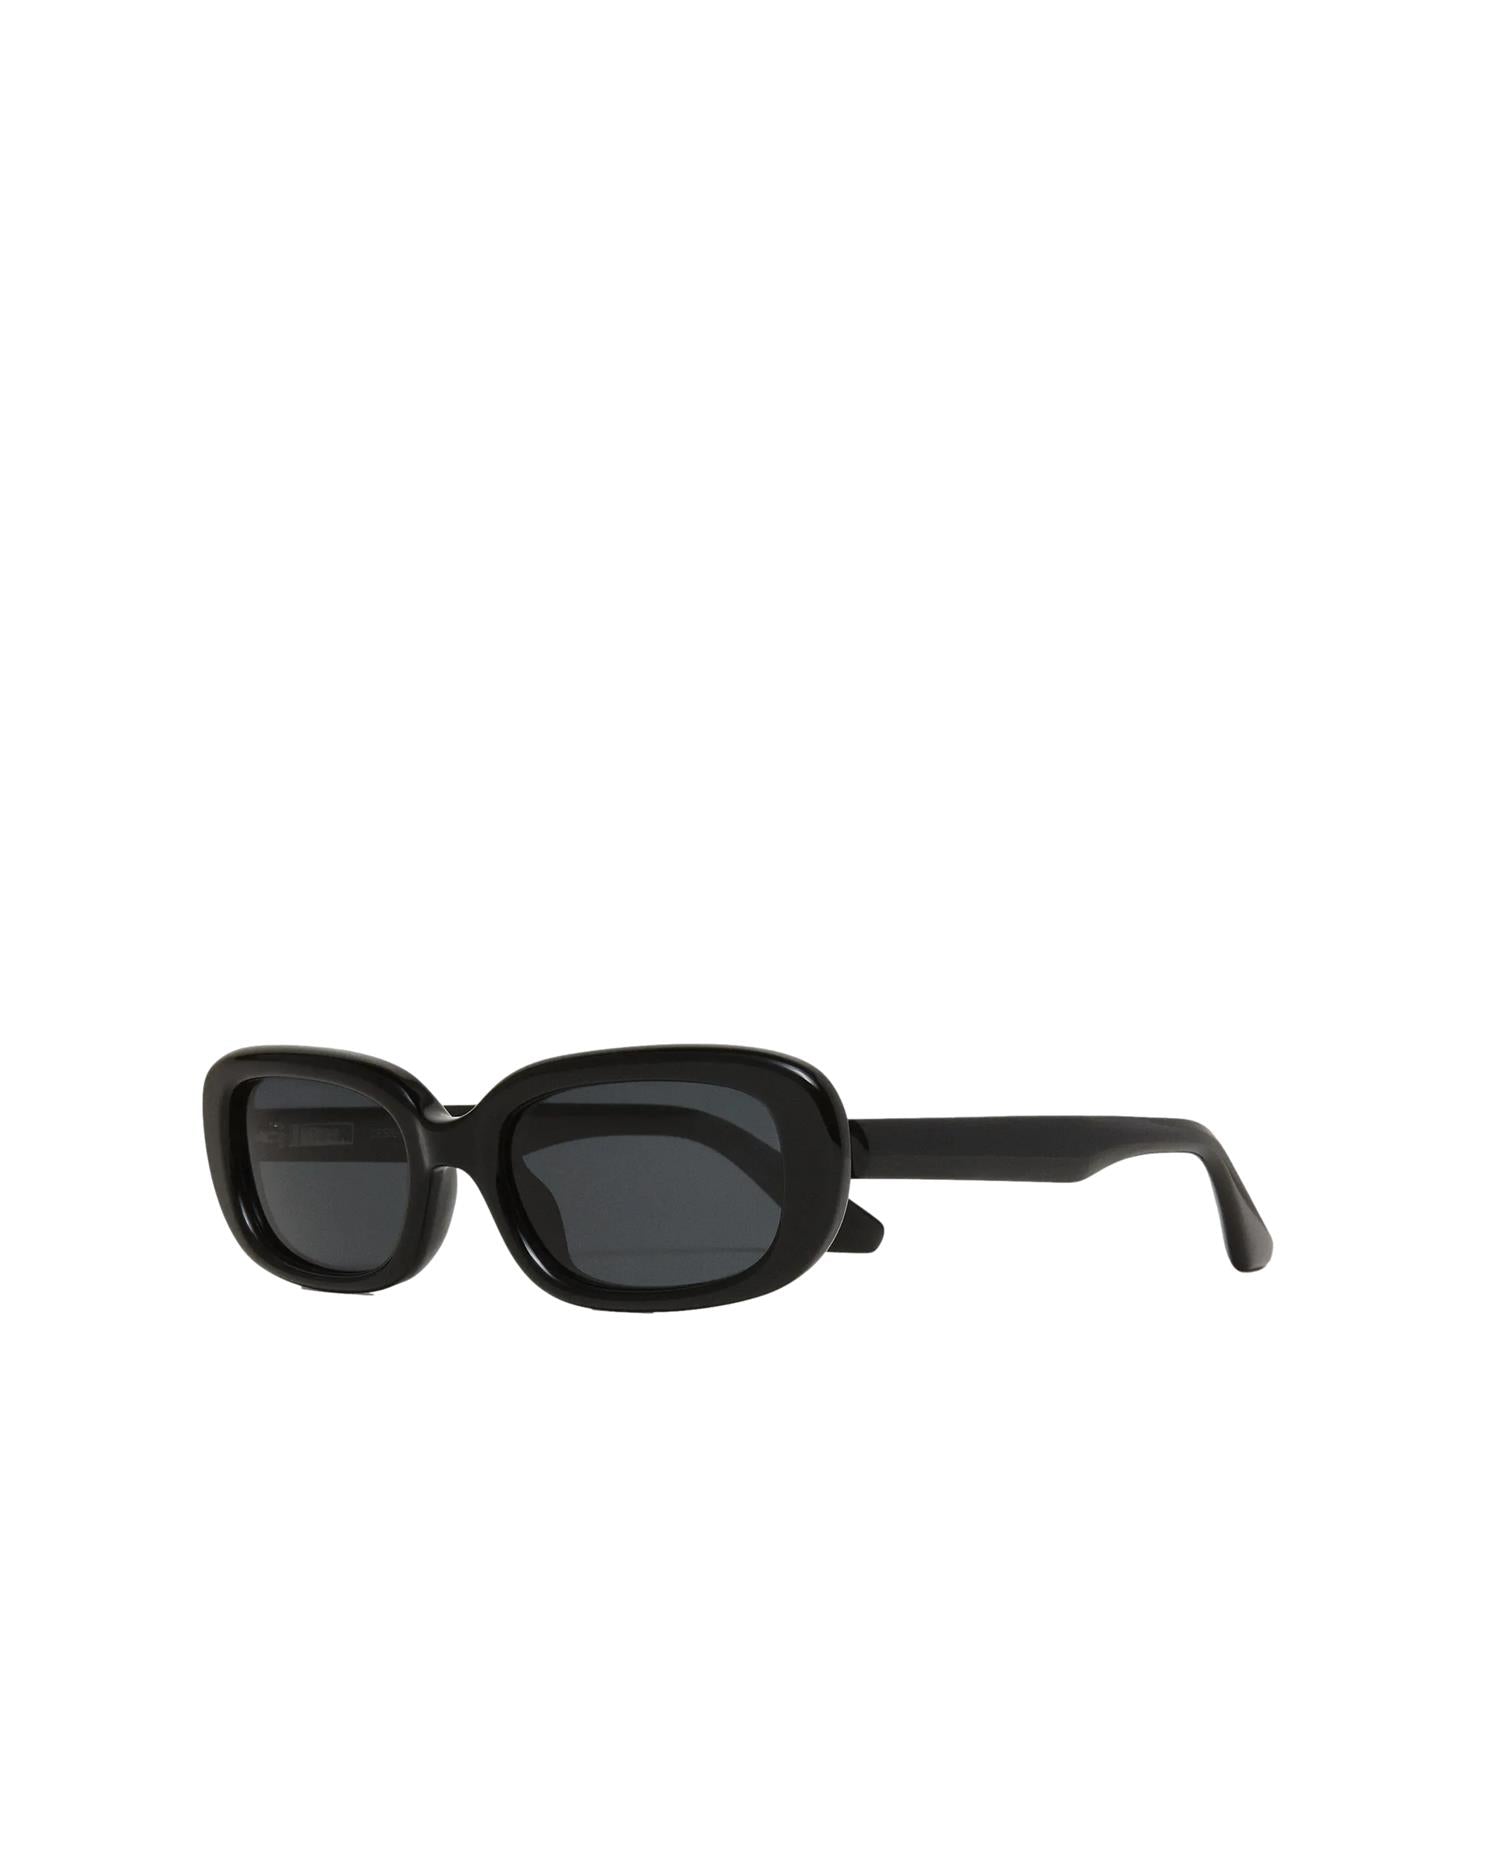 Chimi Eyewear 12 Black Solbriller Sort